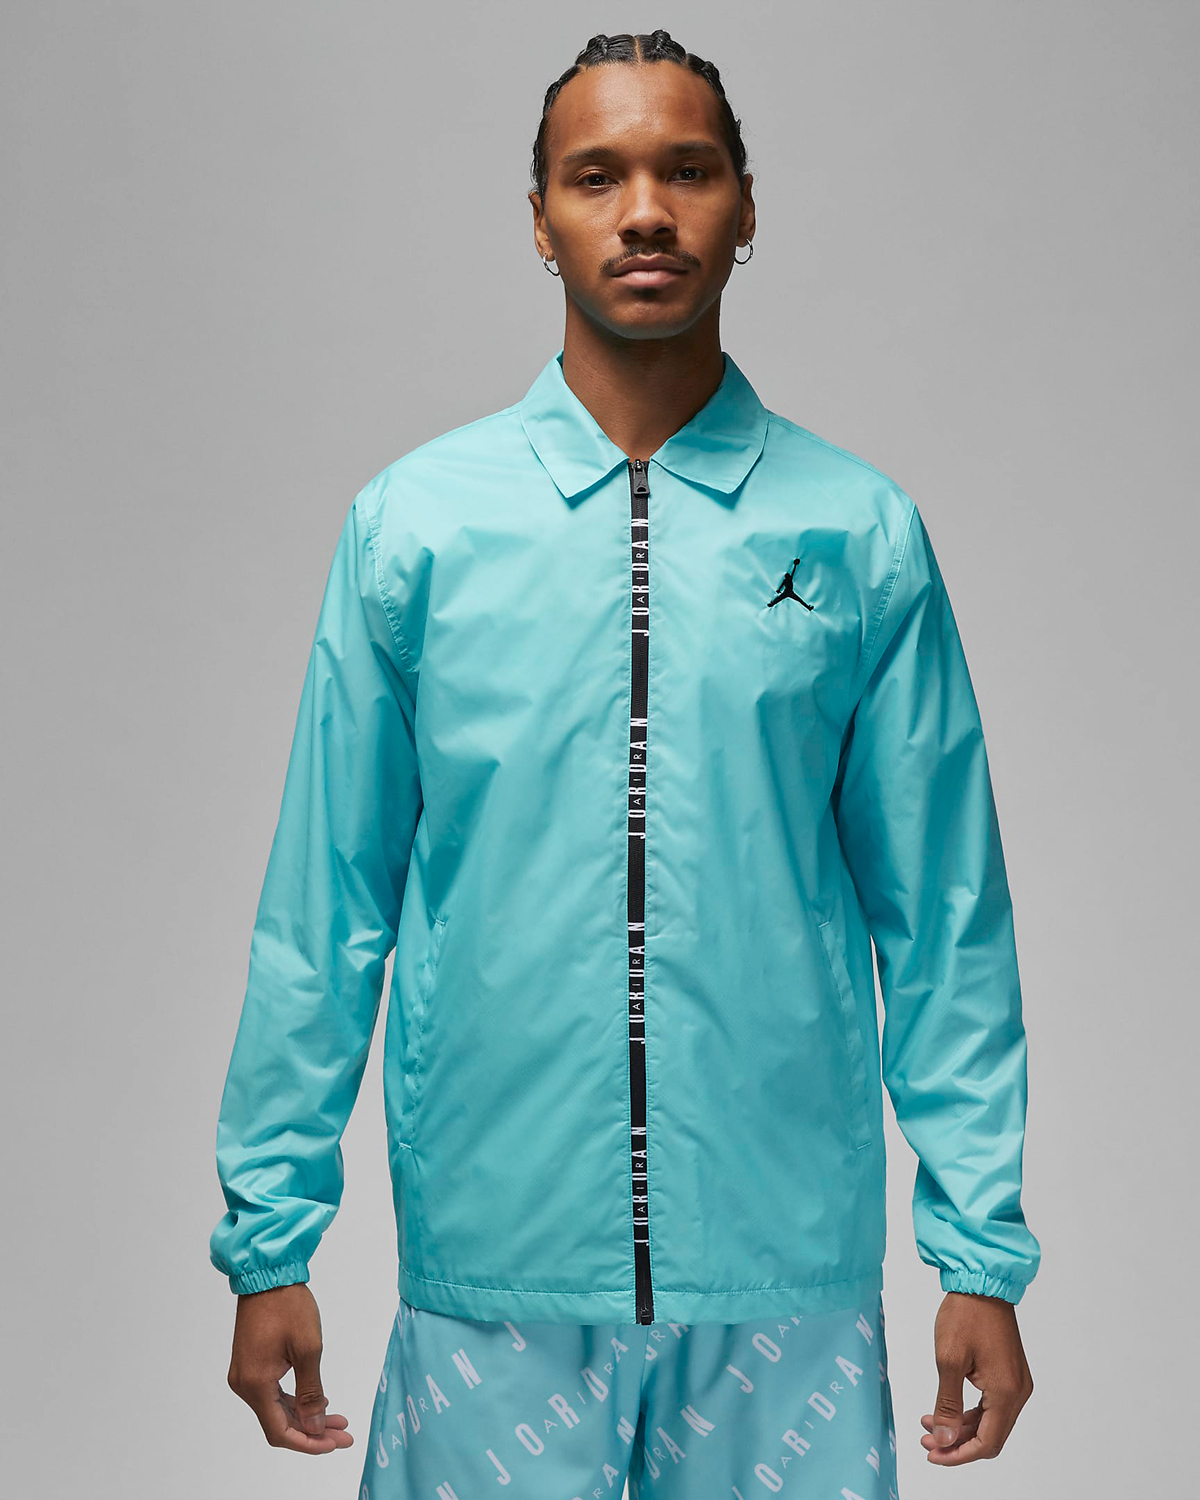 Air Jordan 5 Aqua Shirts Hats Clothing Outfits